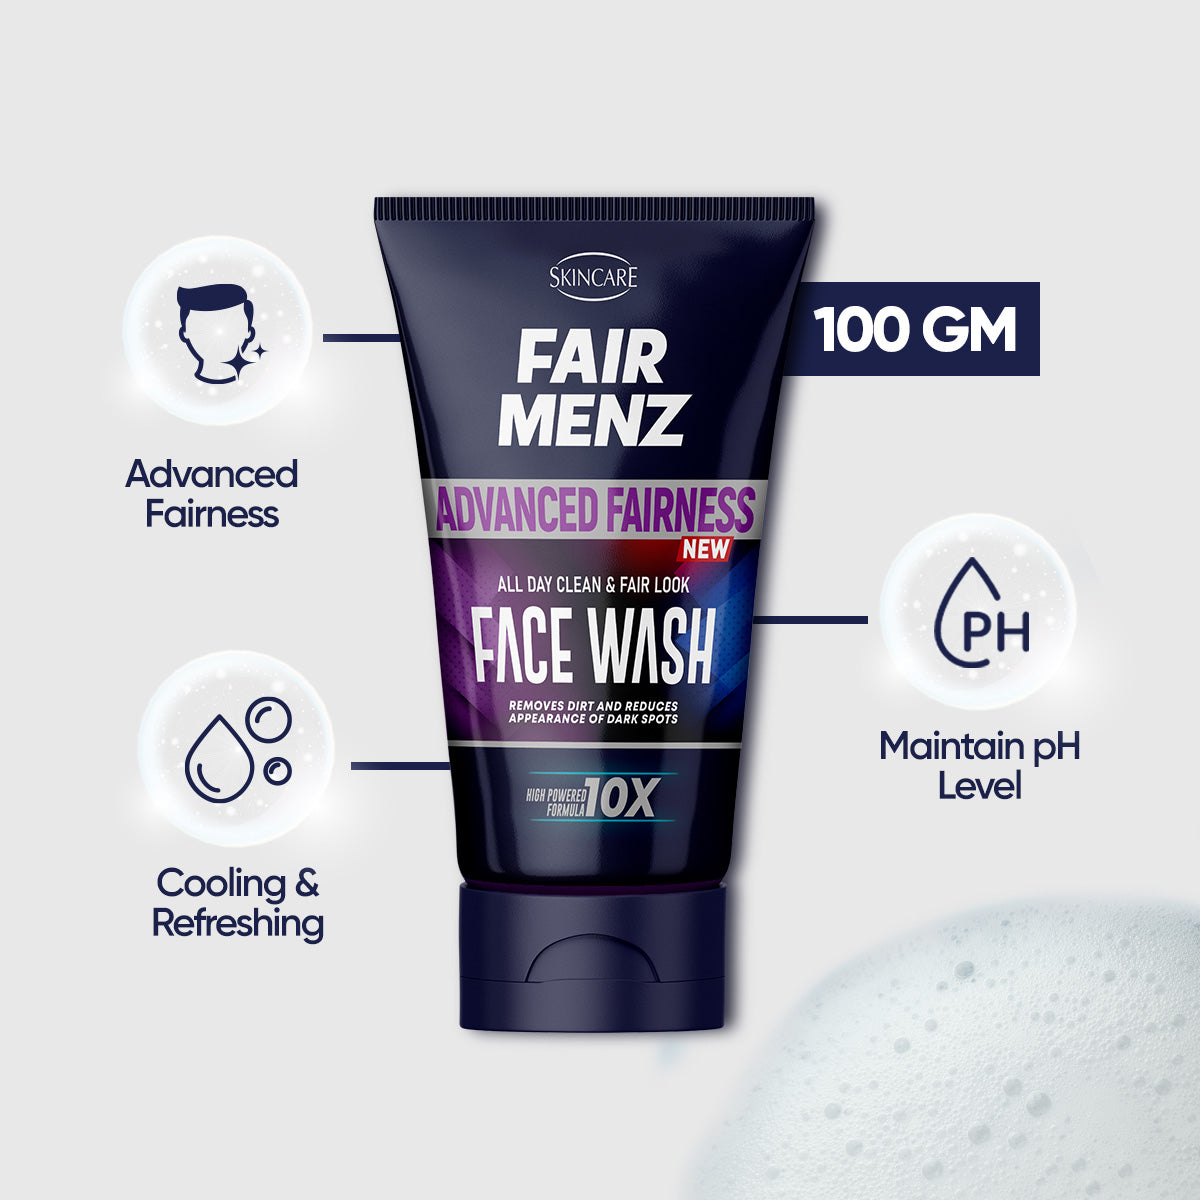 FAIR MENZ Advance Fairness Face wash 10X Formula